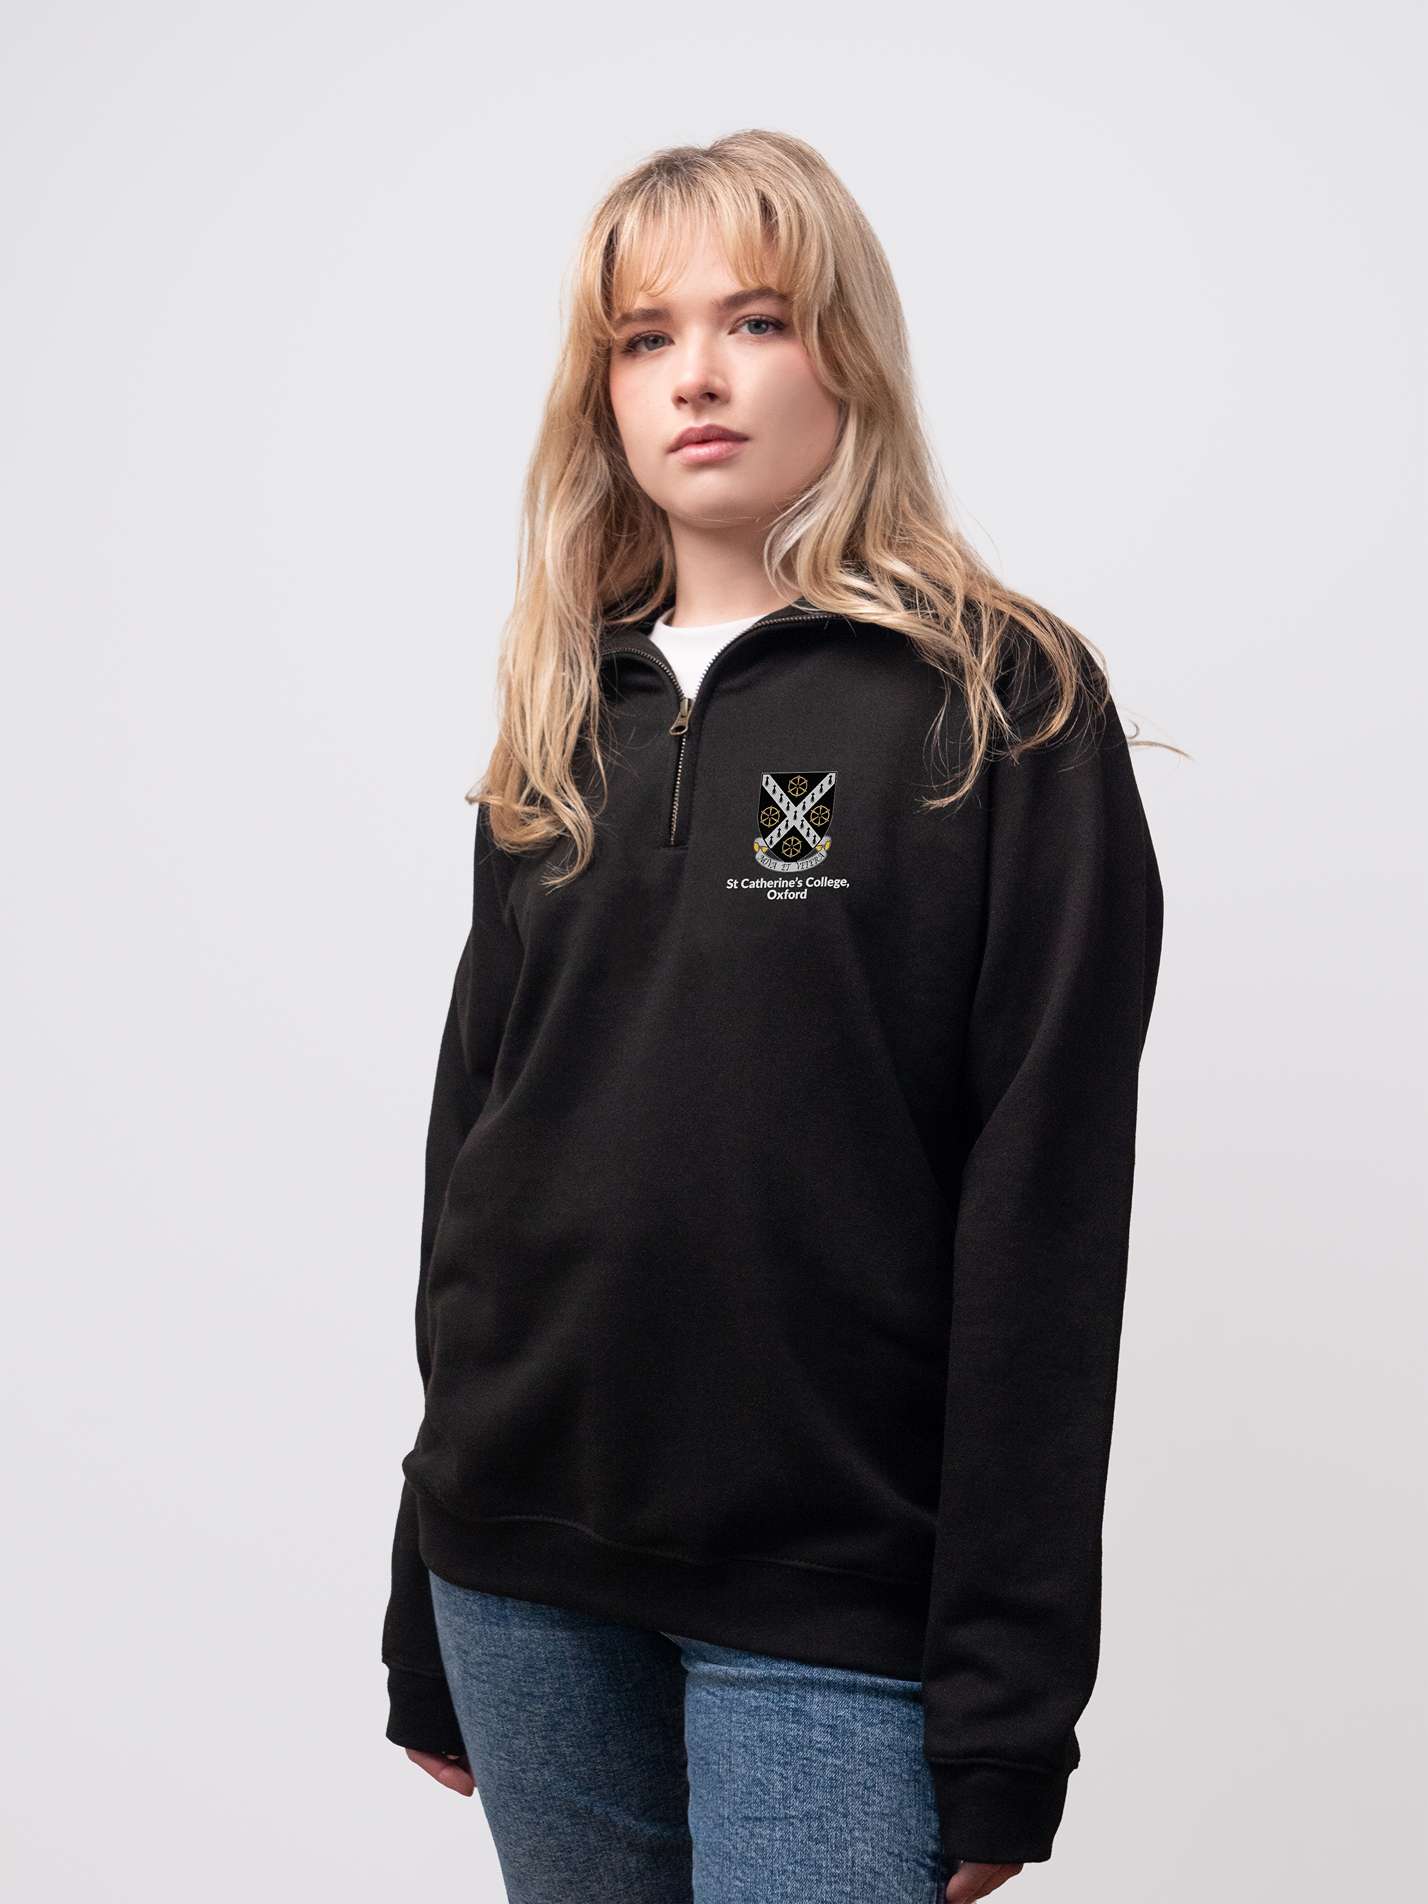 St Catherine's College student wearing a black 1/4 zip sweatshirt 